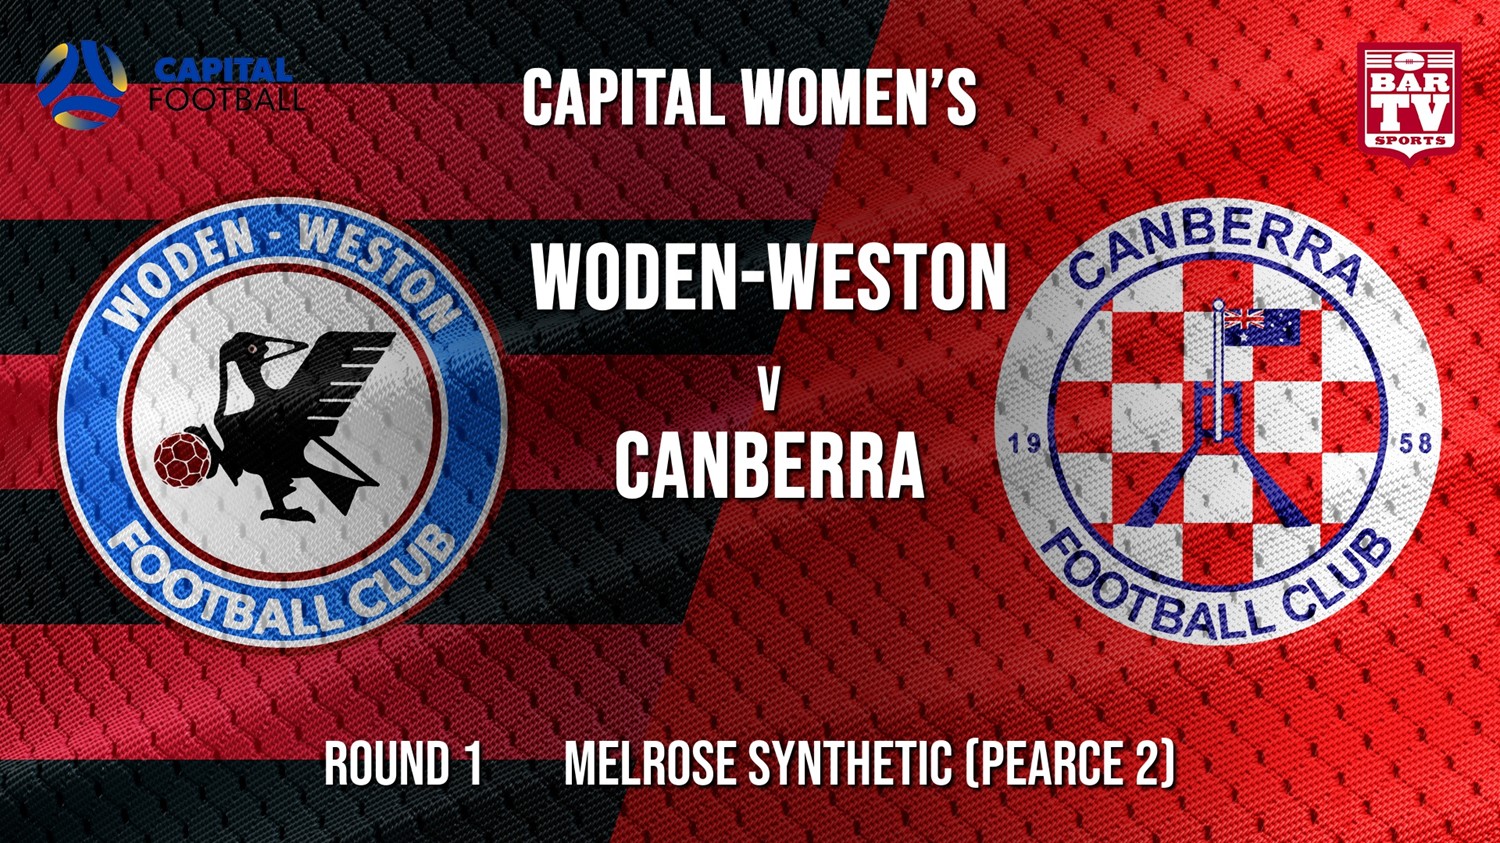 NPL Women - Capital Round 1 - Woden-Weston FC (women) v Canberra FC (women) Minigame Slate Image